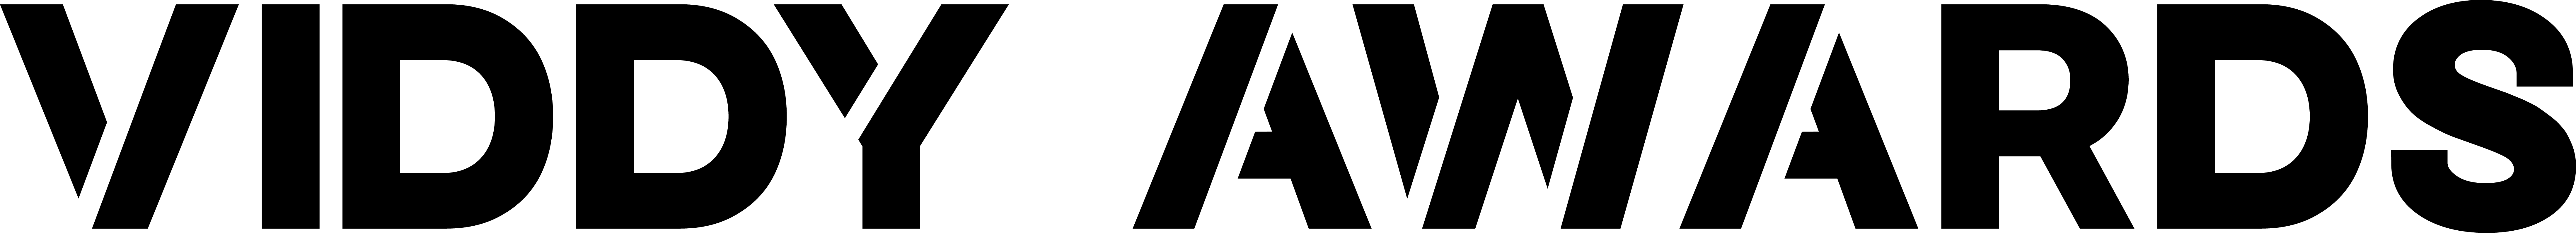 Viddy Awards logo